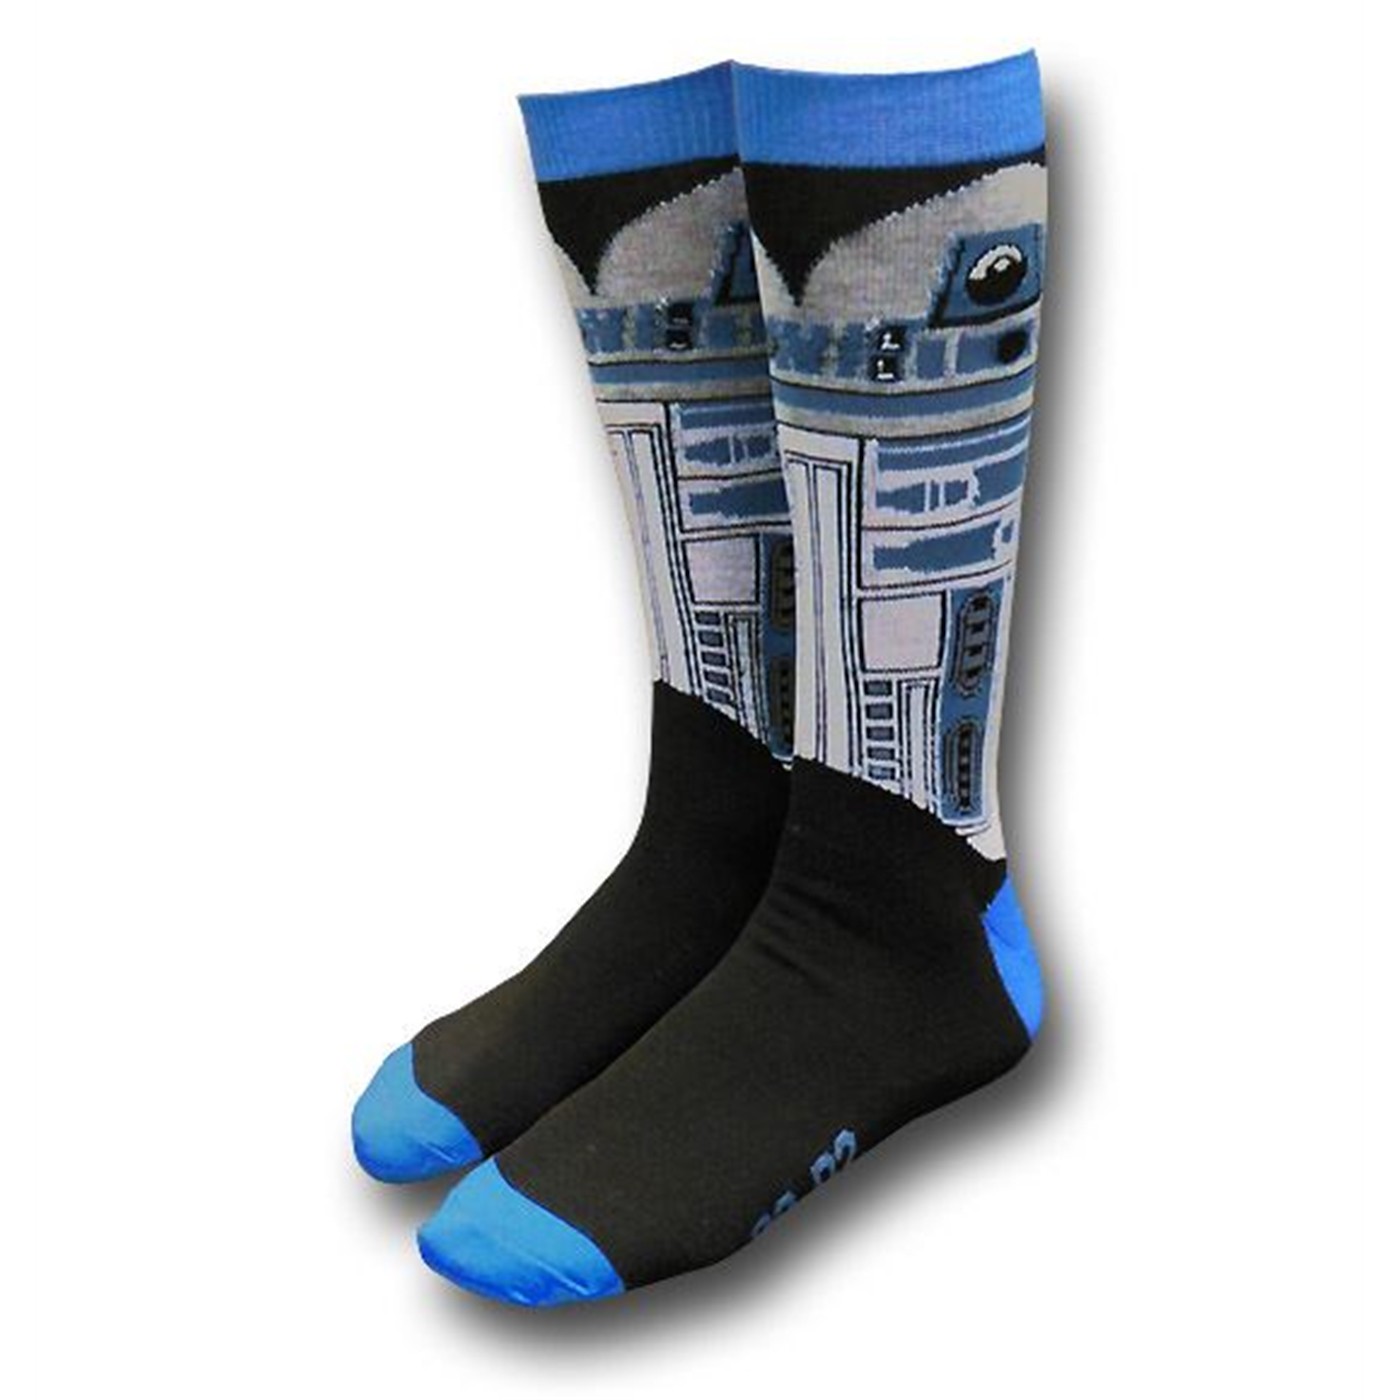 Star Wars Yoda and R2D2 Socks 2-Pack